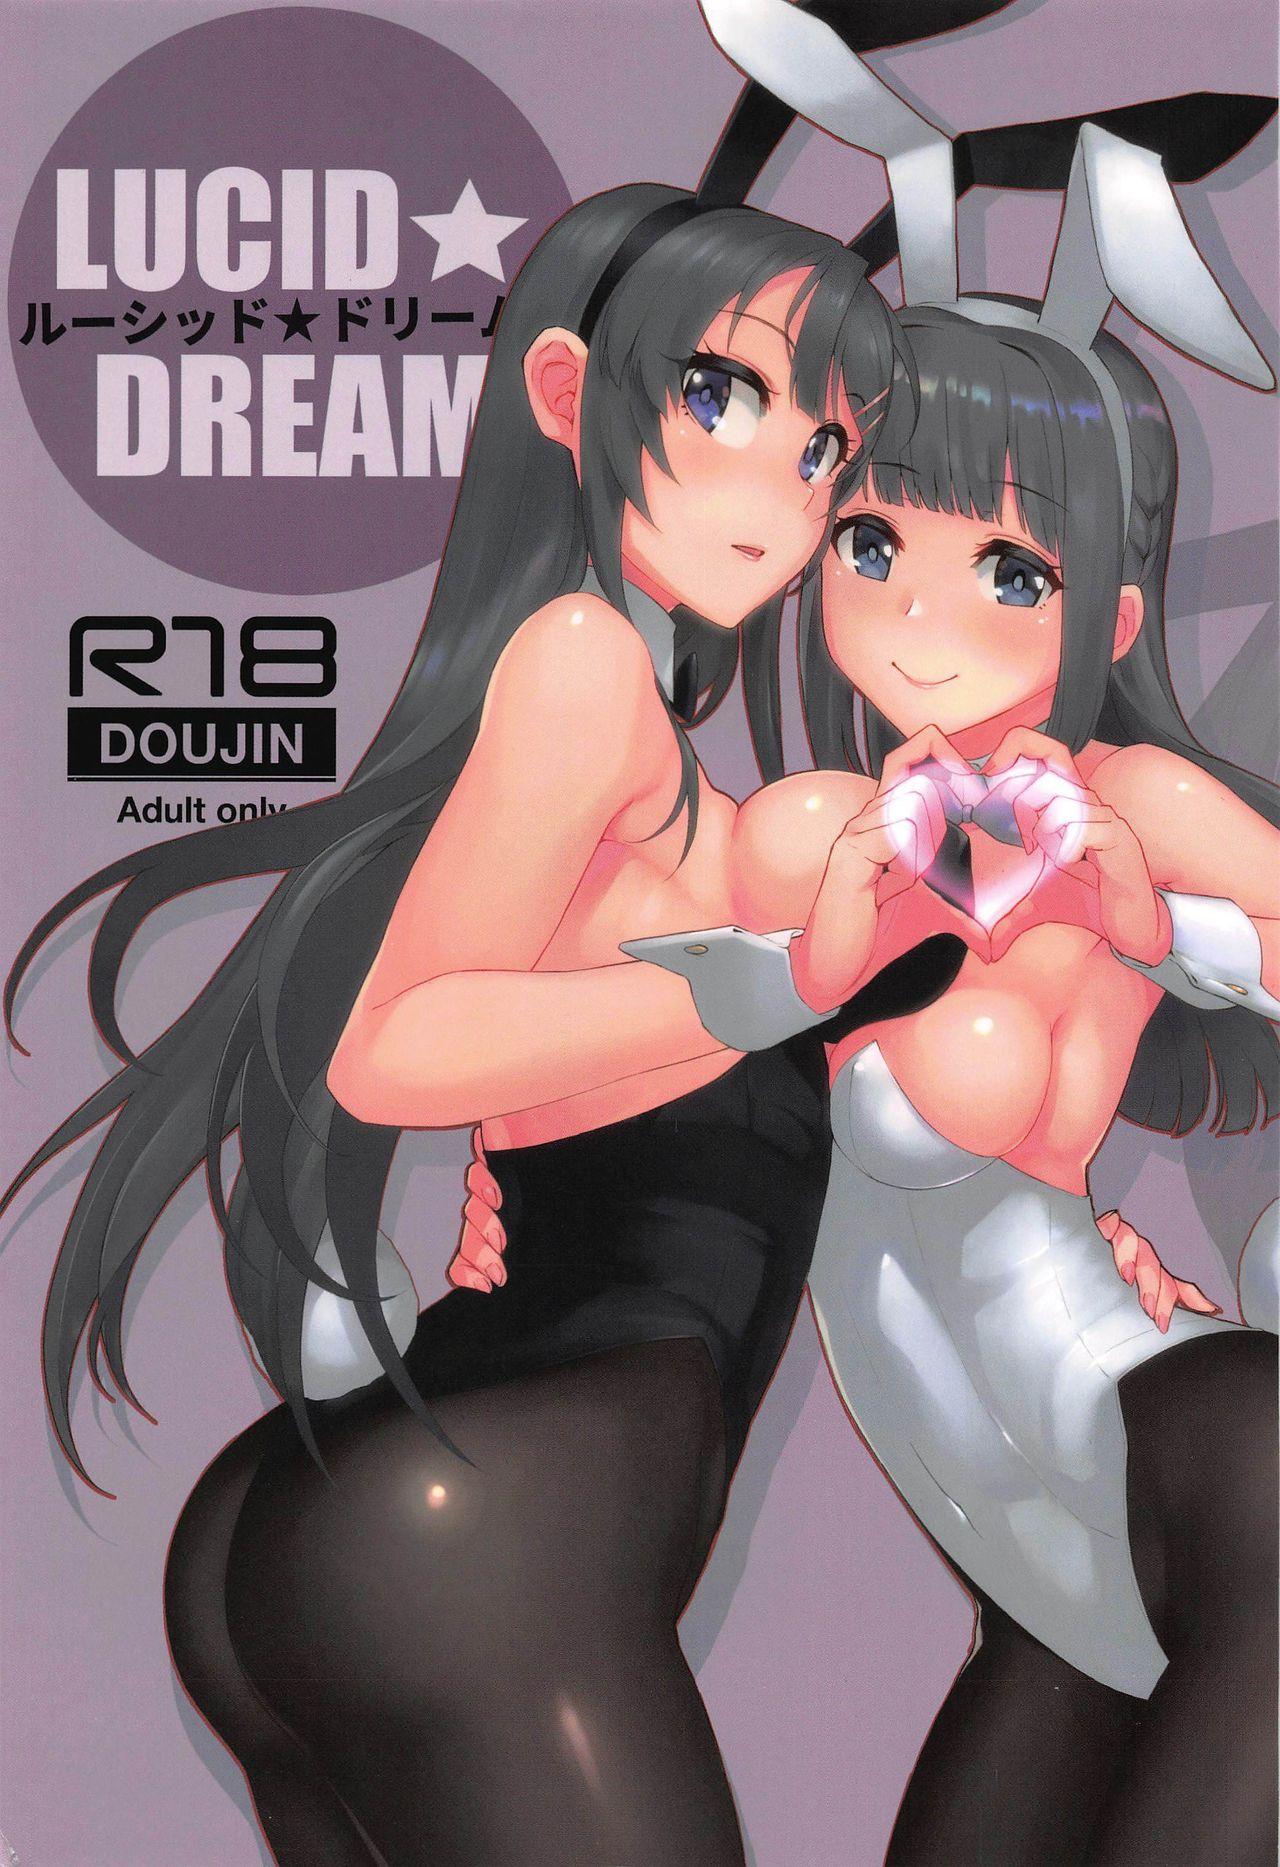 Pussylick Lucid Dream - Seishun buta yarou wa bunny girl senpai no yume o minai Loira - Picture 1